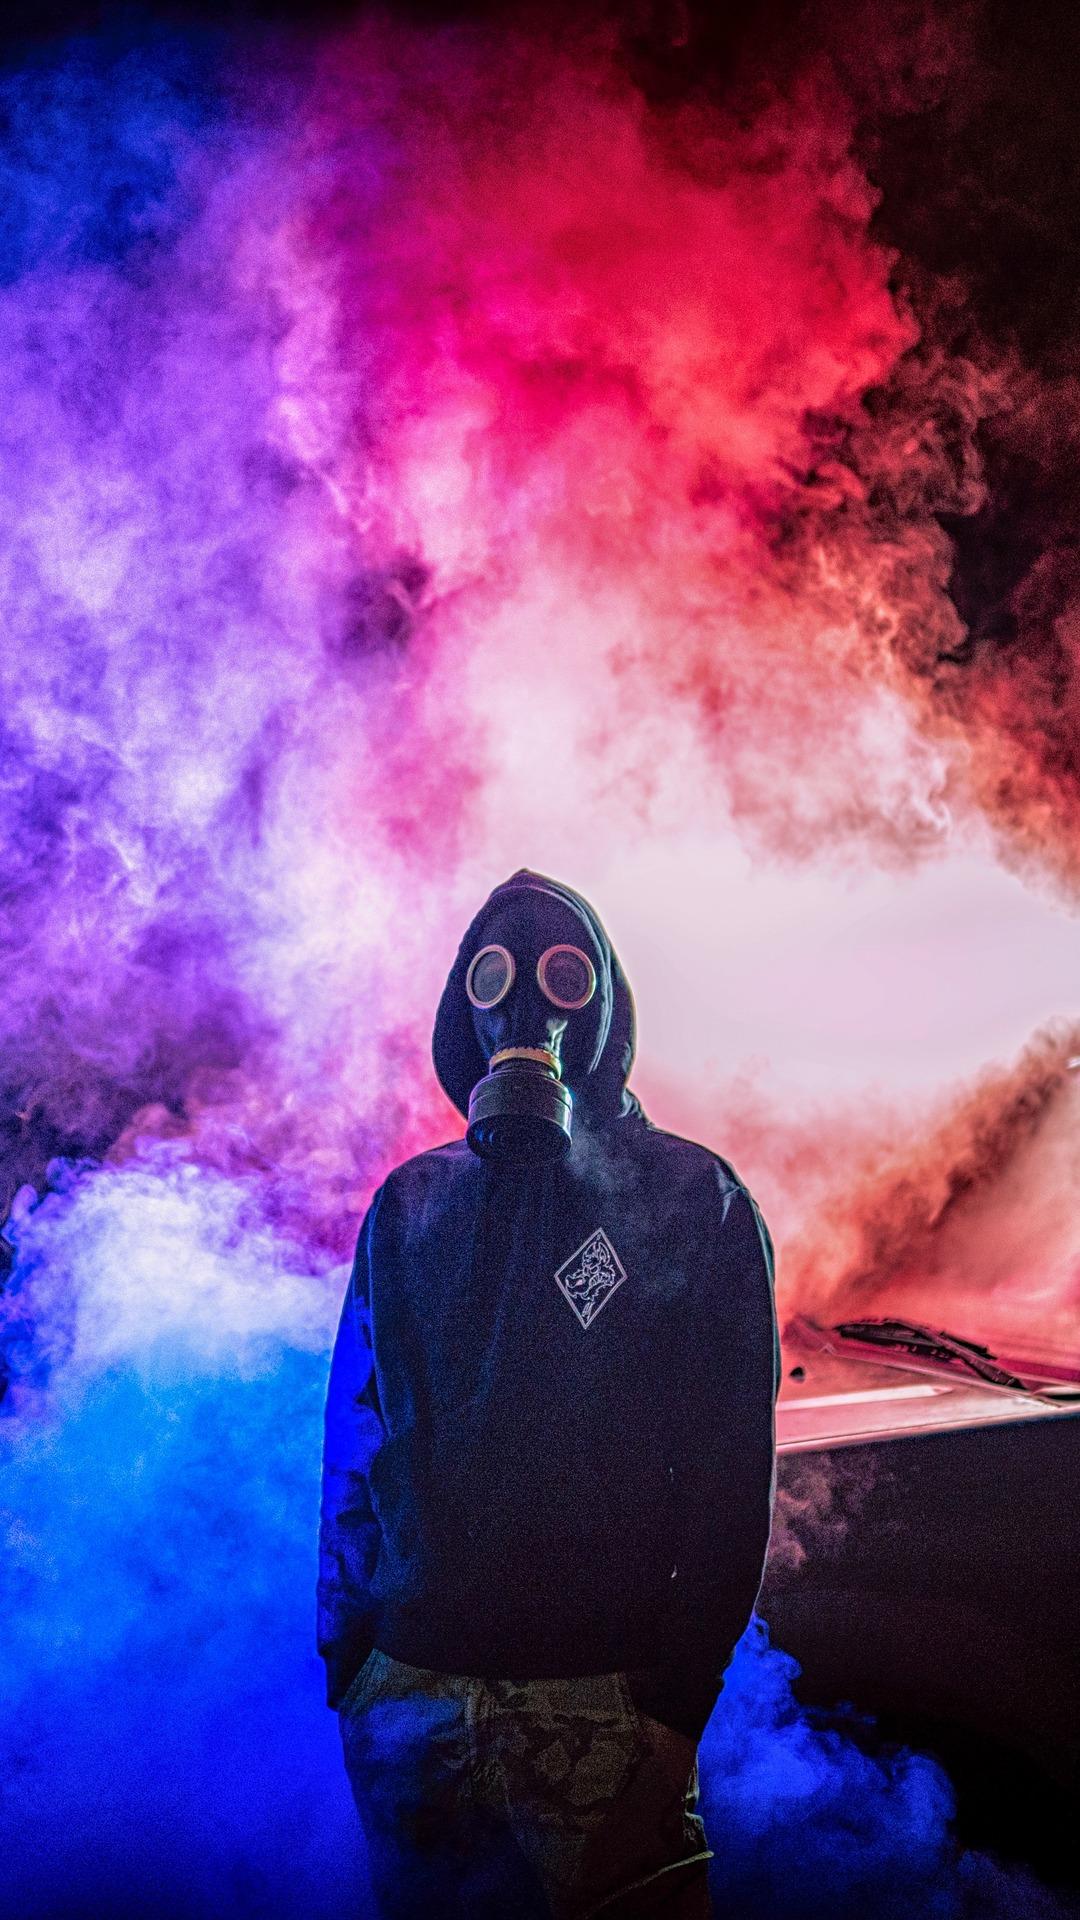 Download wallpaper 1080x1920 gas mask, man, smoke, colorful samsung